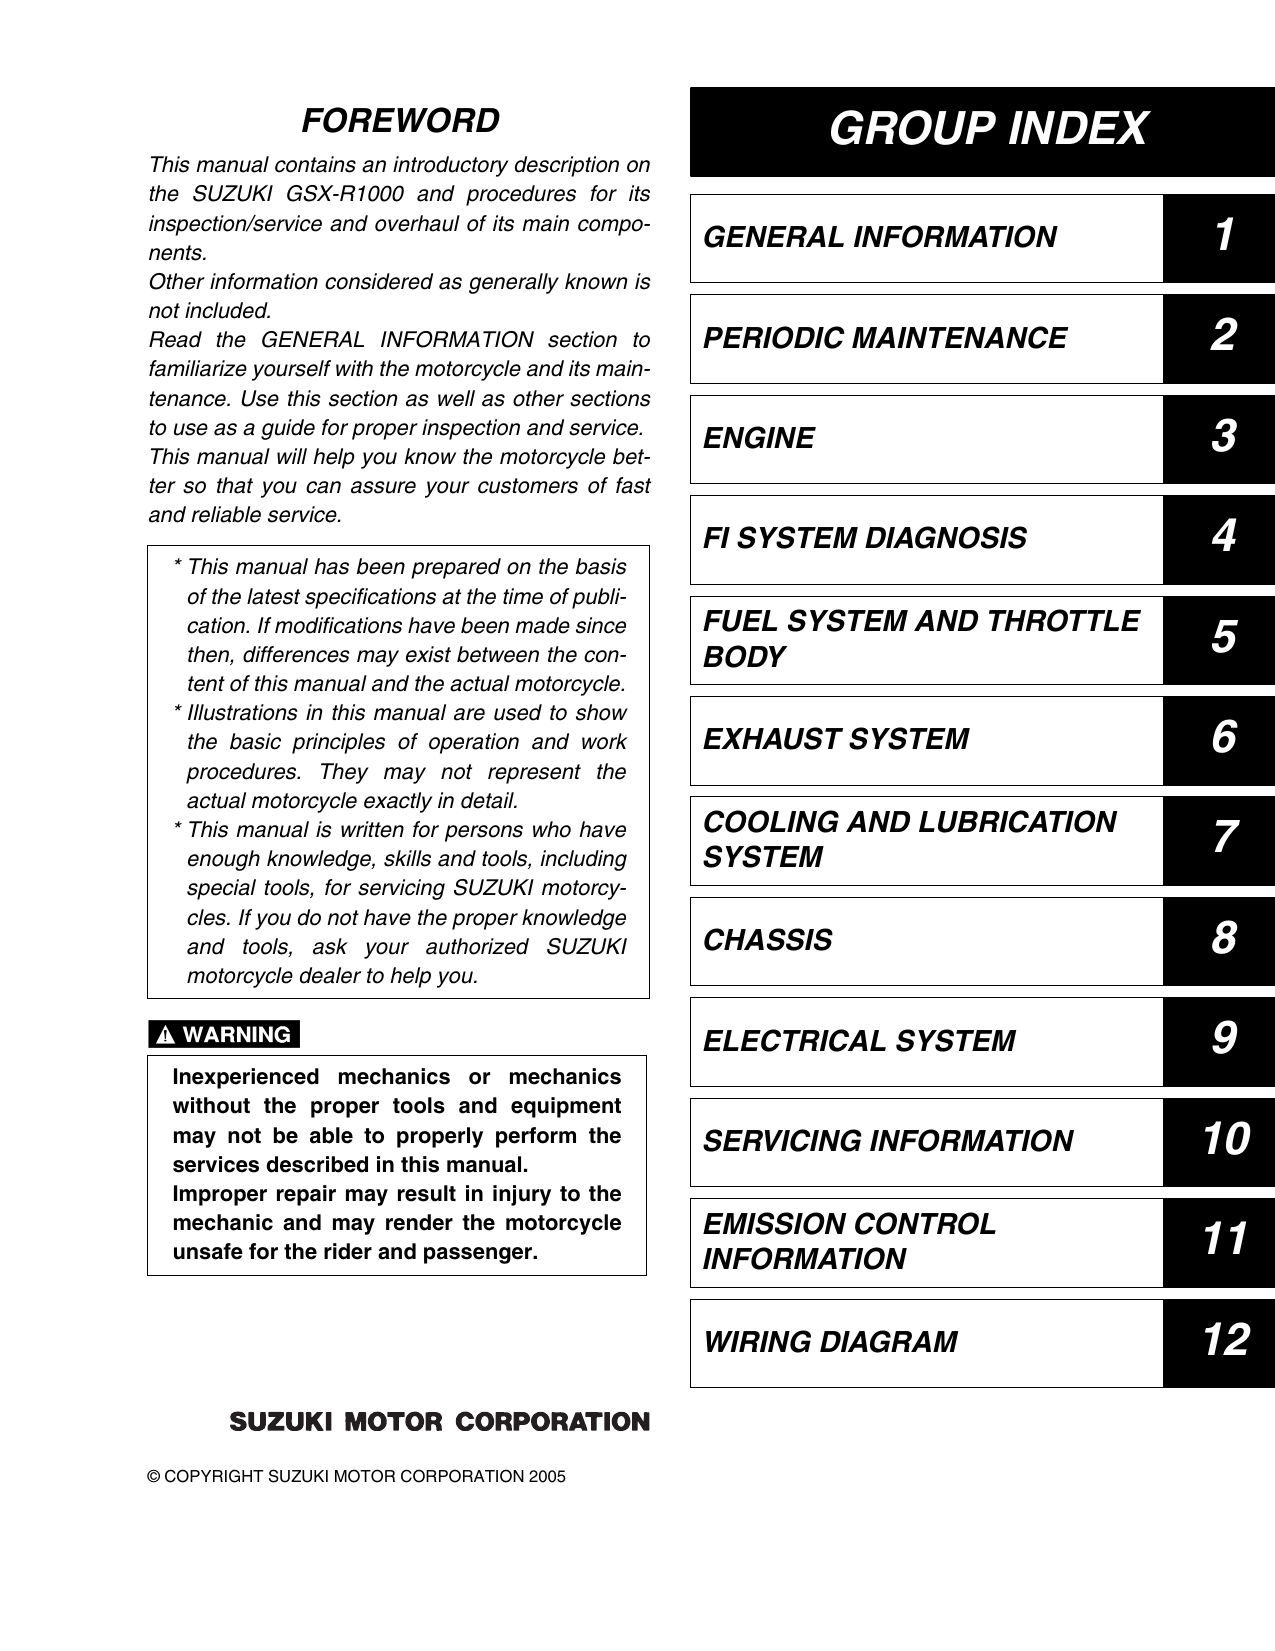 2005 Suzuki GSX-R1000 repair and service manual Preview image 2